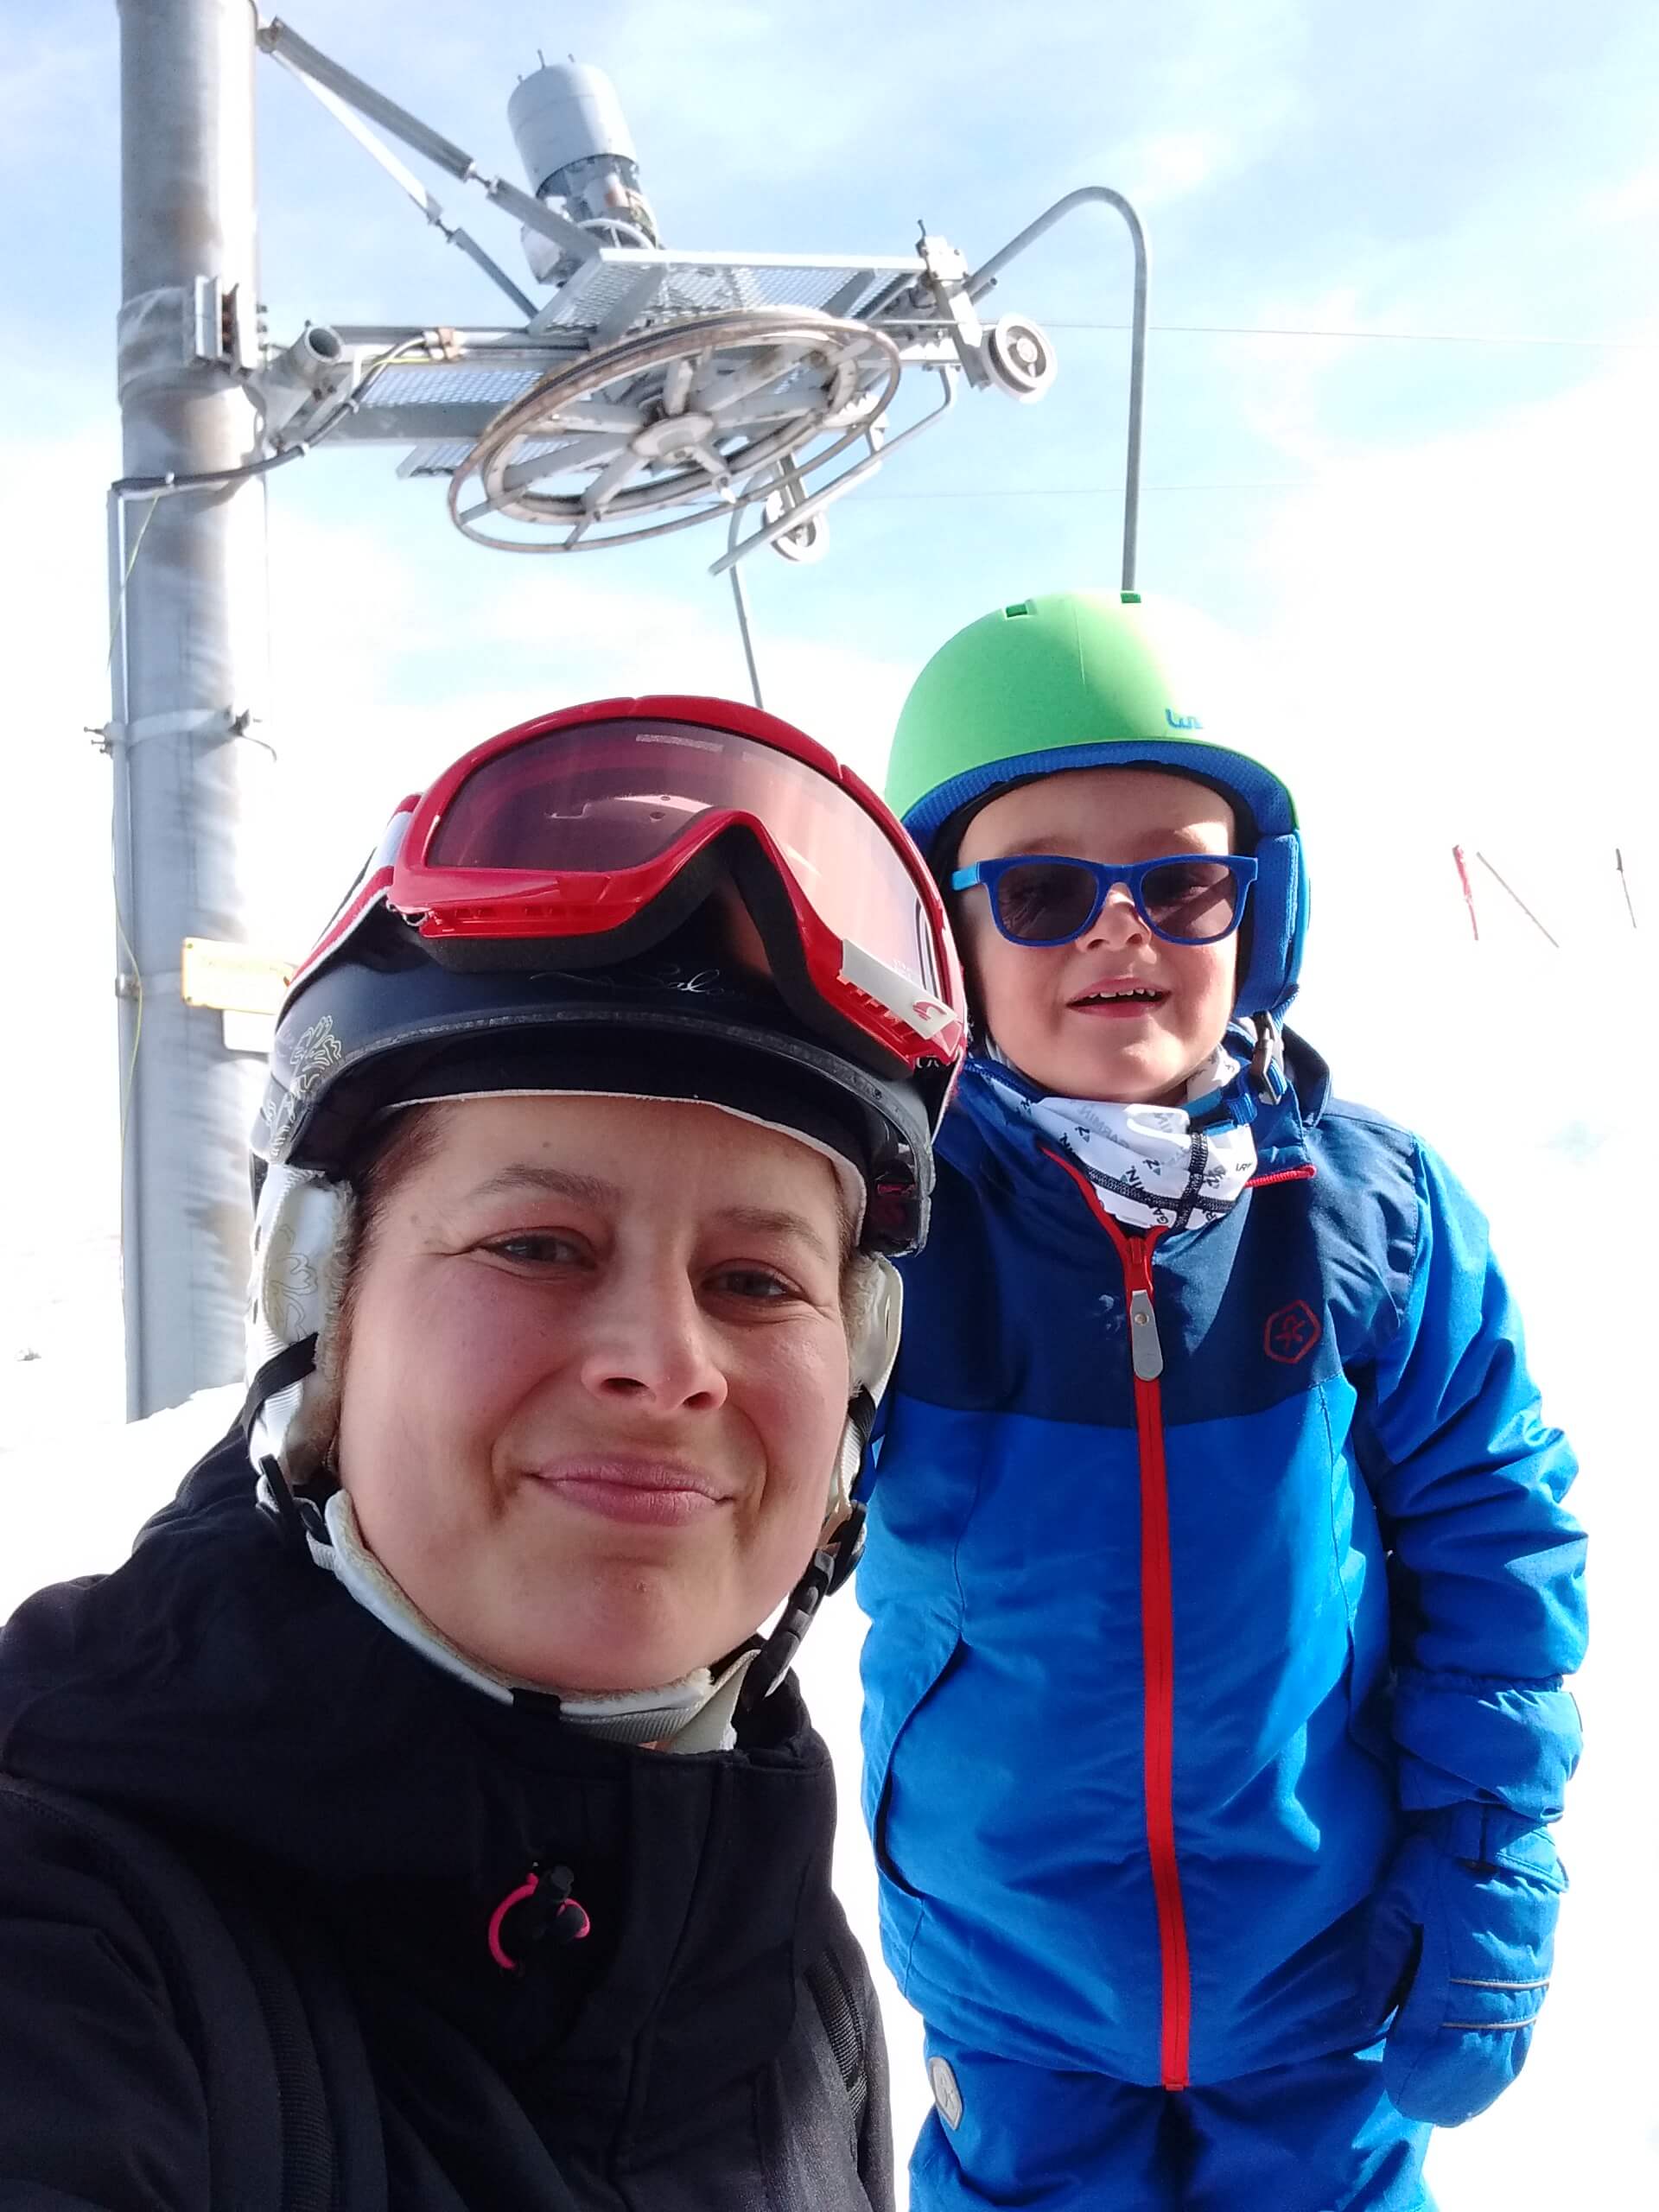 S deťmi na lyže ⛷